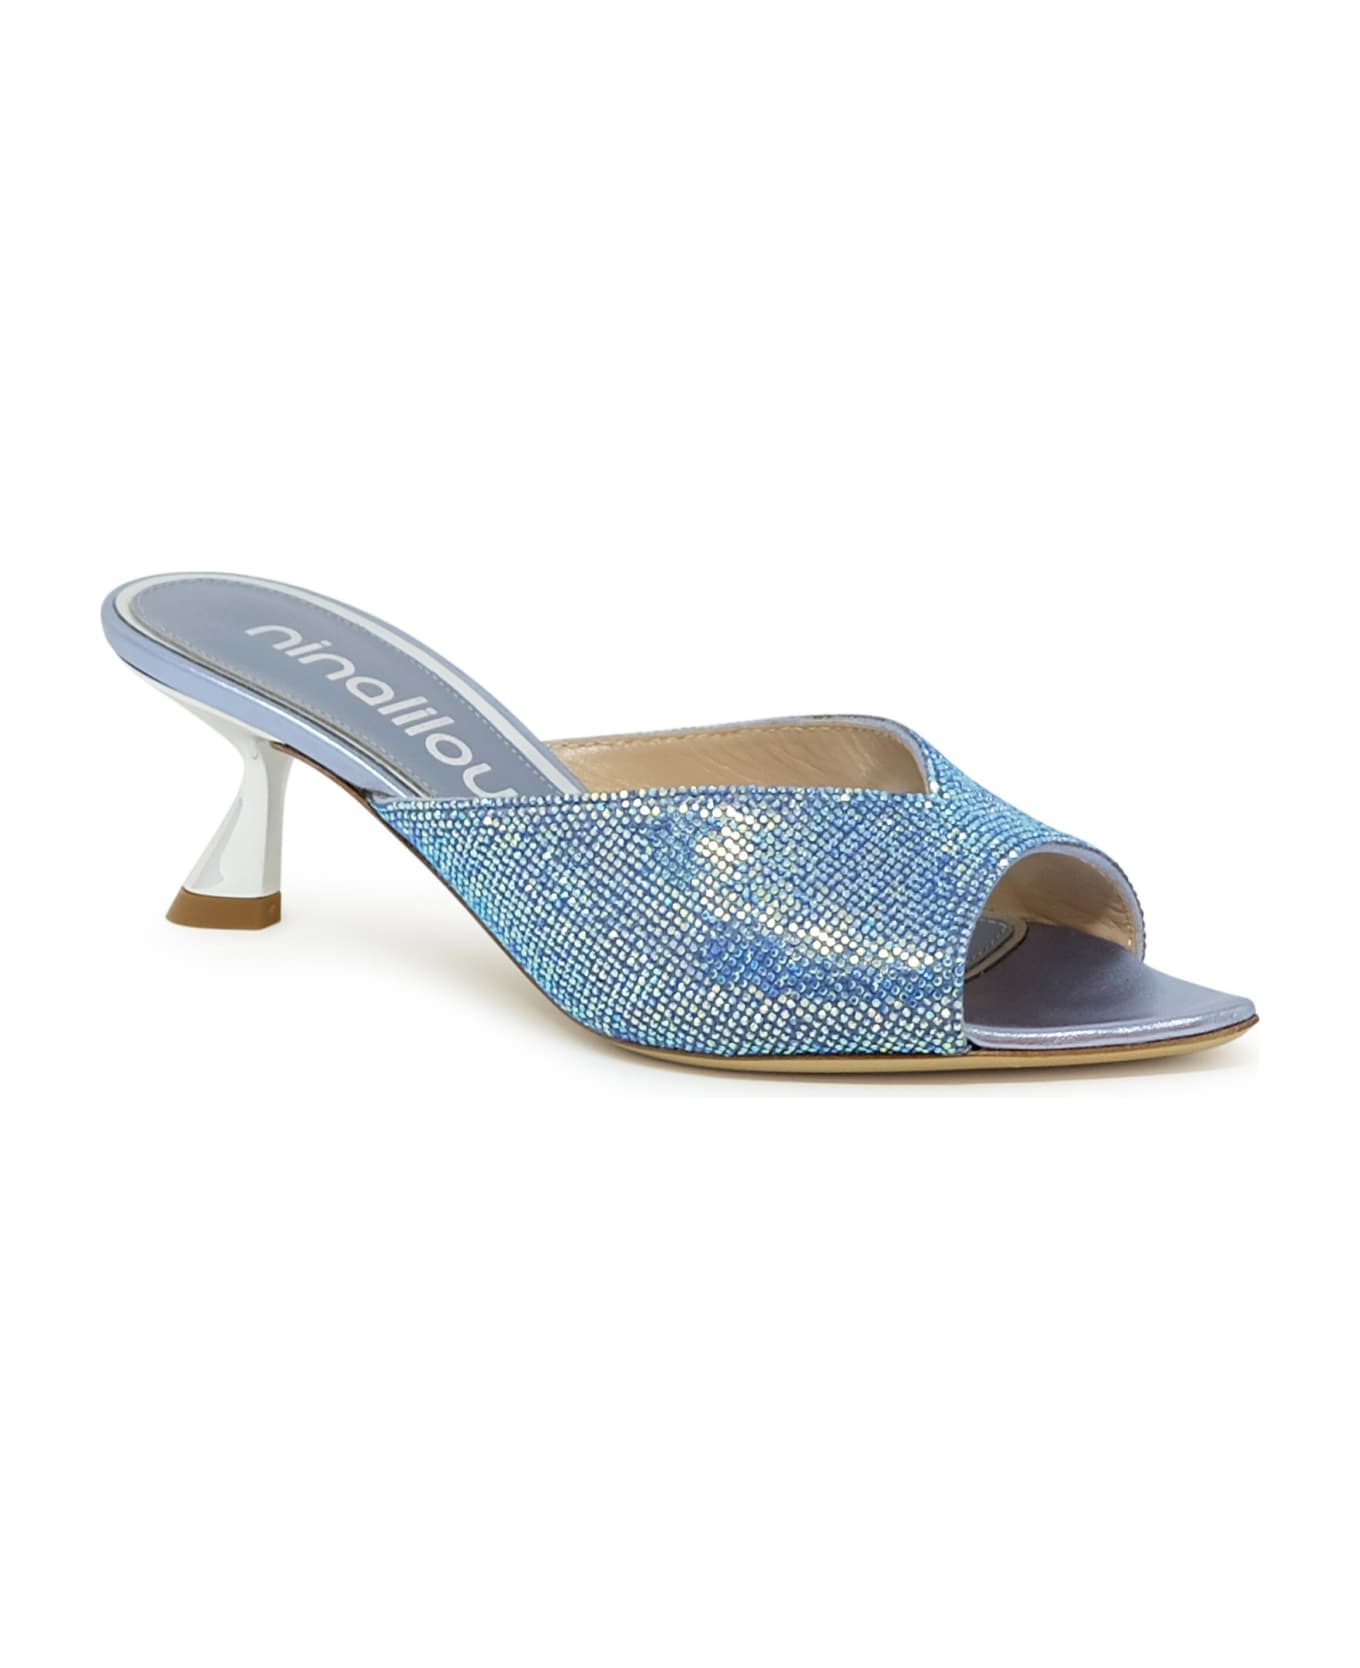 Ninalilou 341080p5/17 Blue/swaroski Leather Sabot Sandals - BLUE